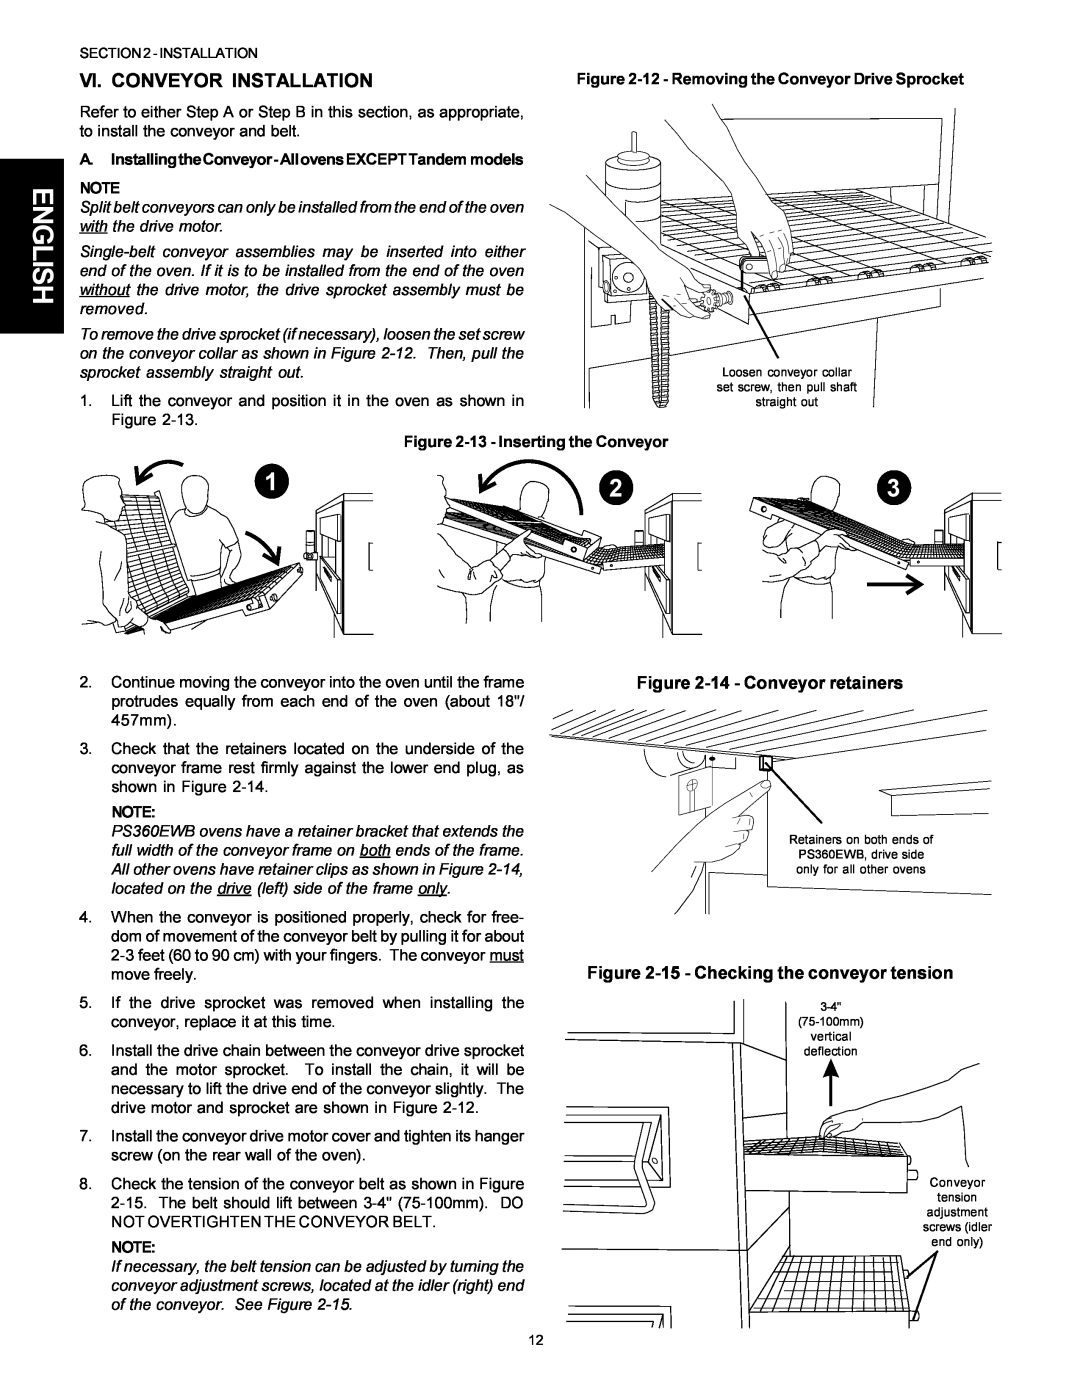 Middleby Marshall PS300F English, Vi. Conveyor Installation, 14- Conveyor retainers, 15- Checking the conveyor tension 